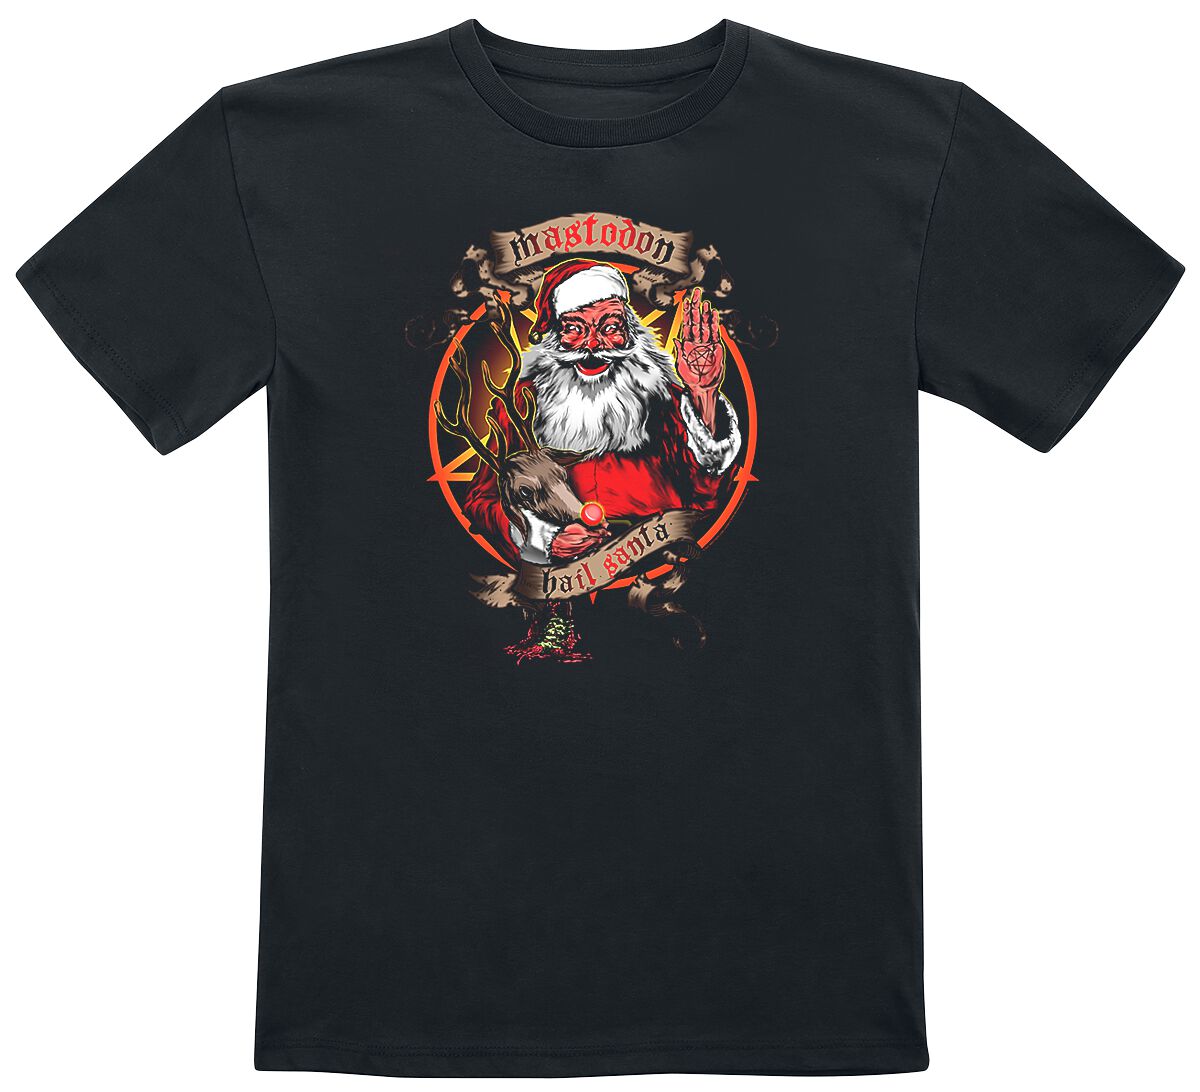 T-shirt de Mastodon - Kids - Hail Santa - 122/128 - pour filles & garçonse - noir